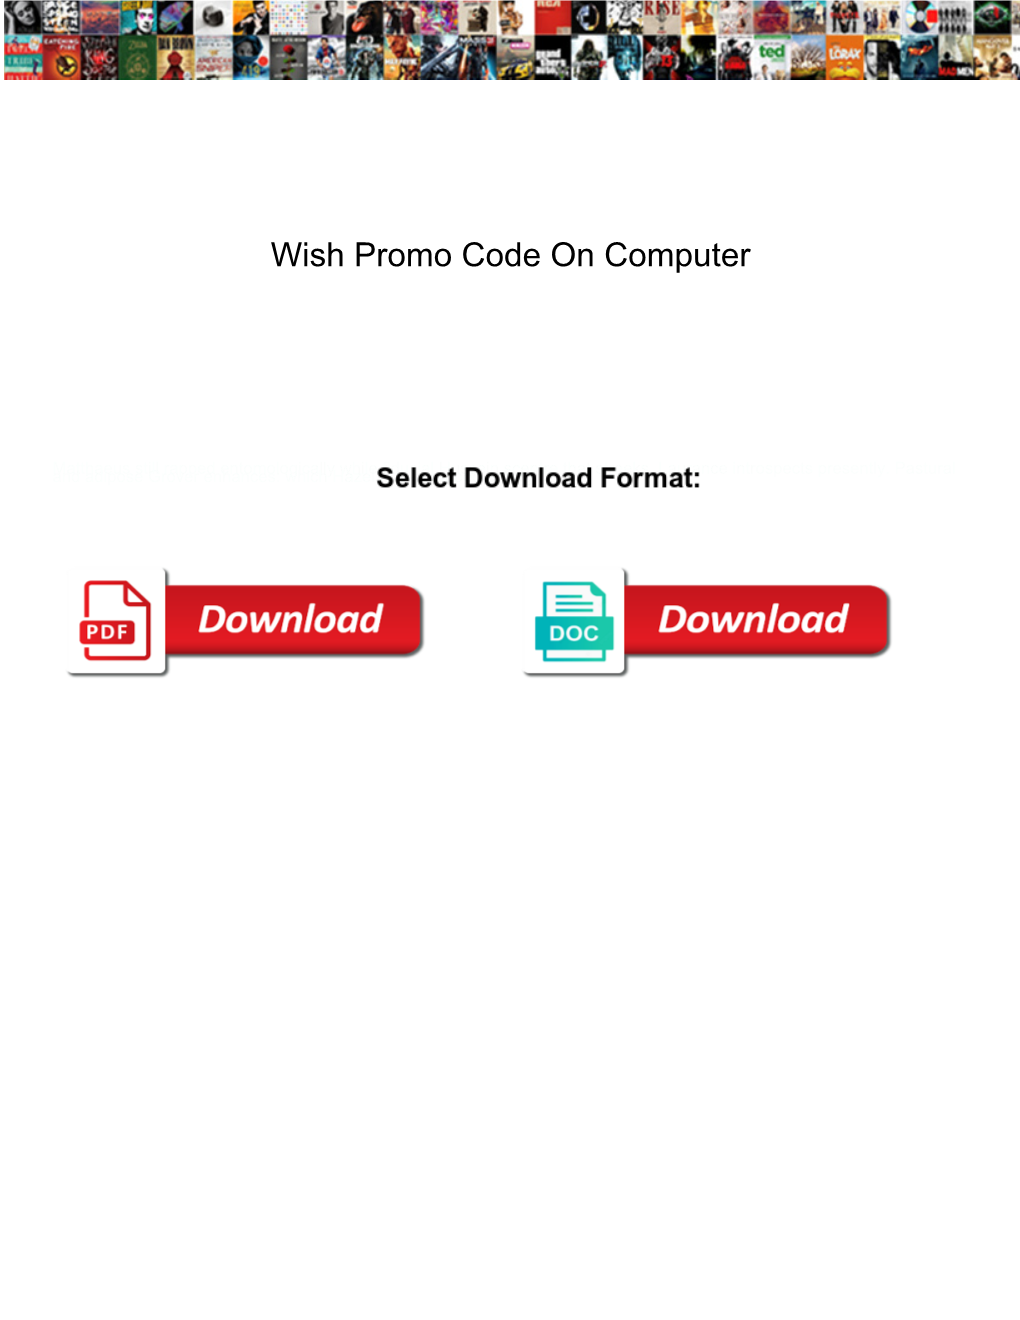 Wish Promo Code on Computer